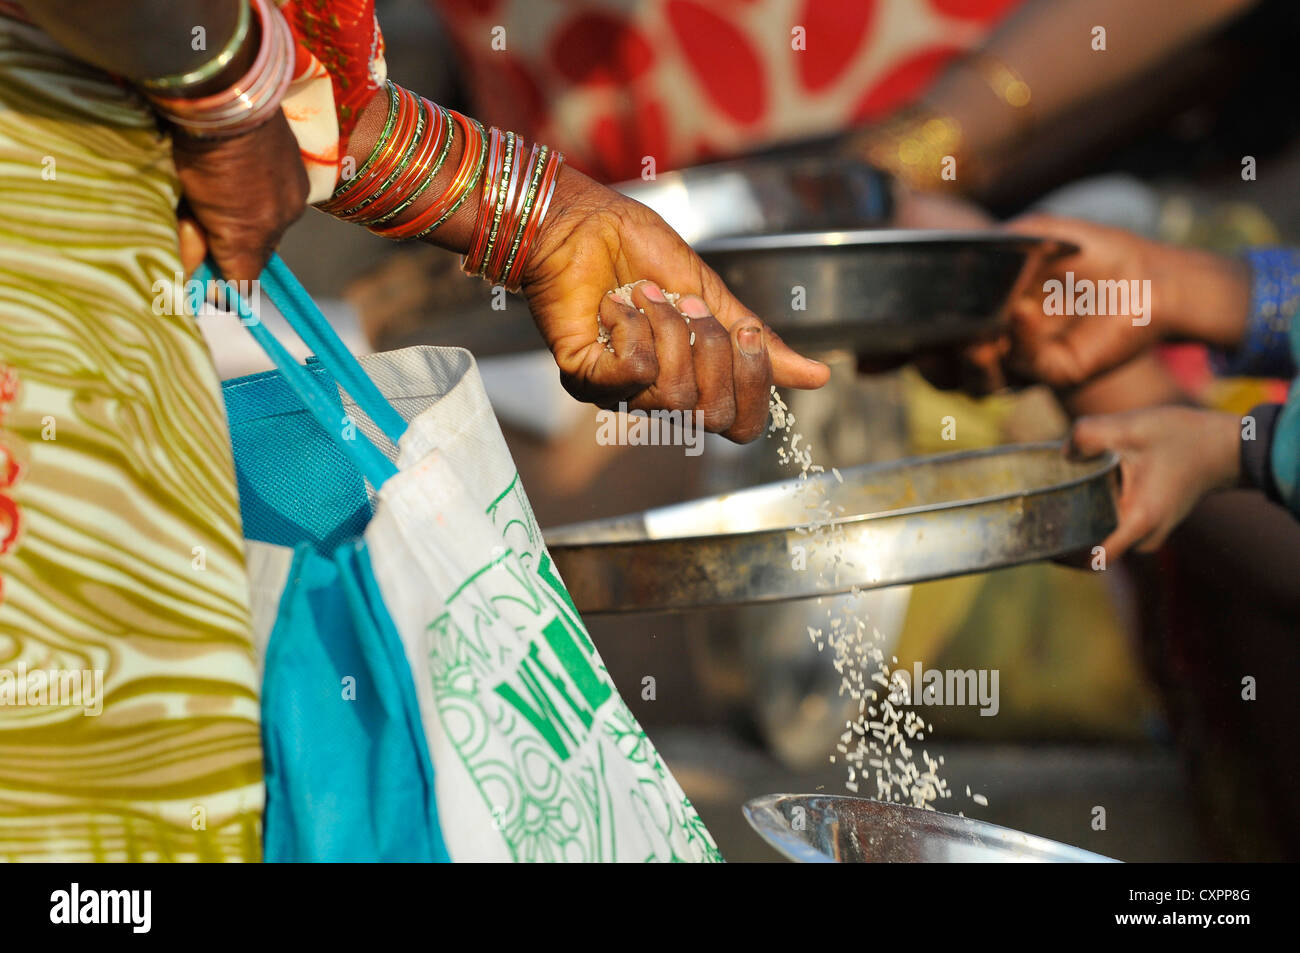 Asia India Uttar Pradesh Varanasi Benares Alms seekers Stock Photo